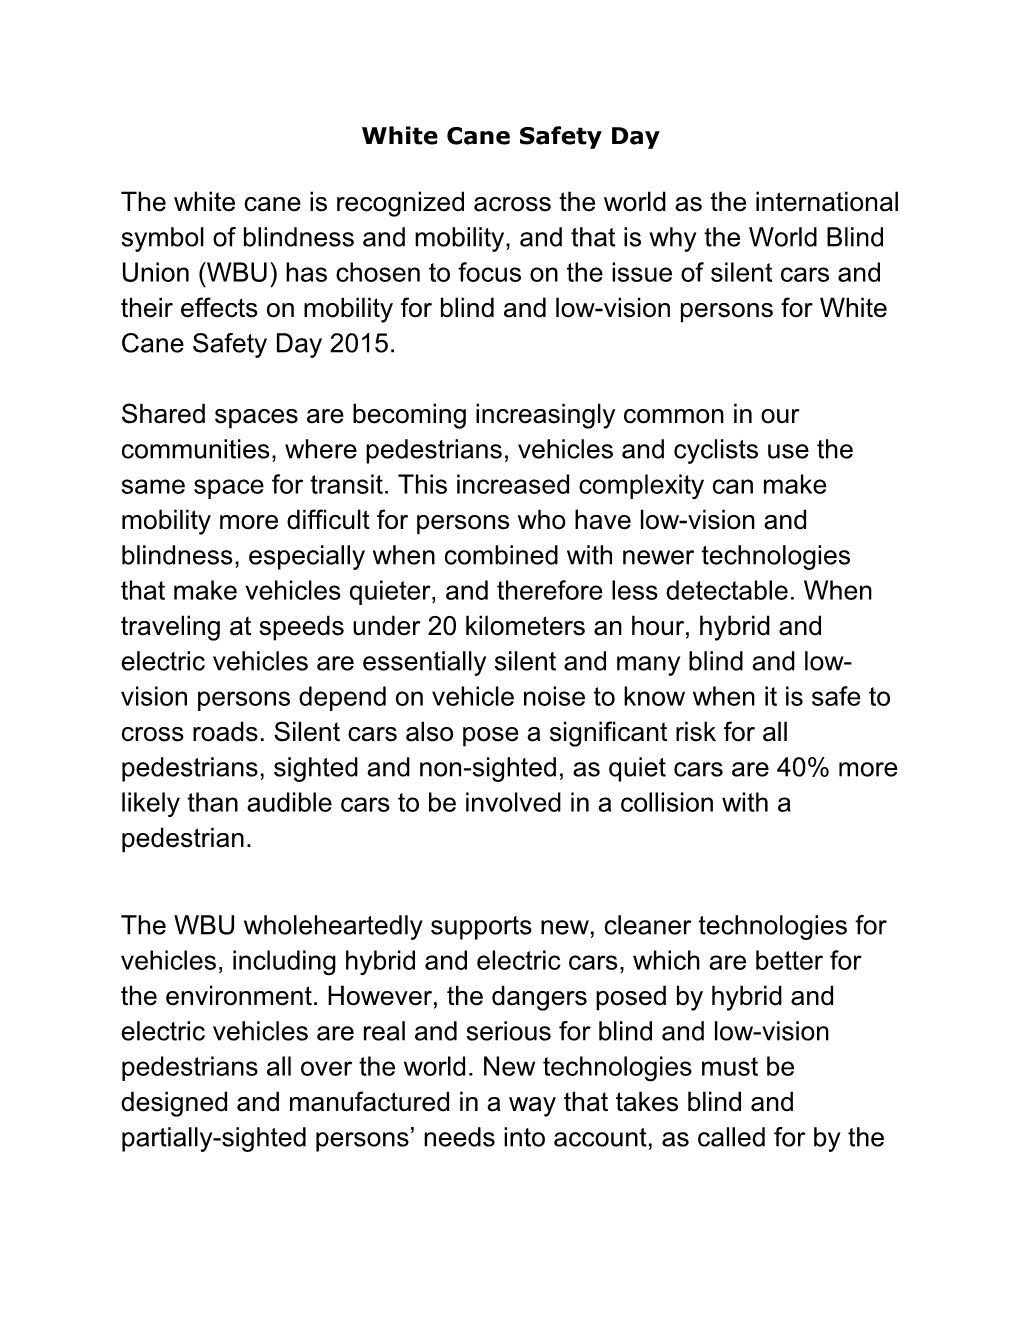 WBU Press Release - White Cane Day 2015